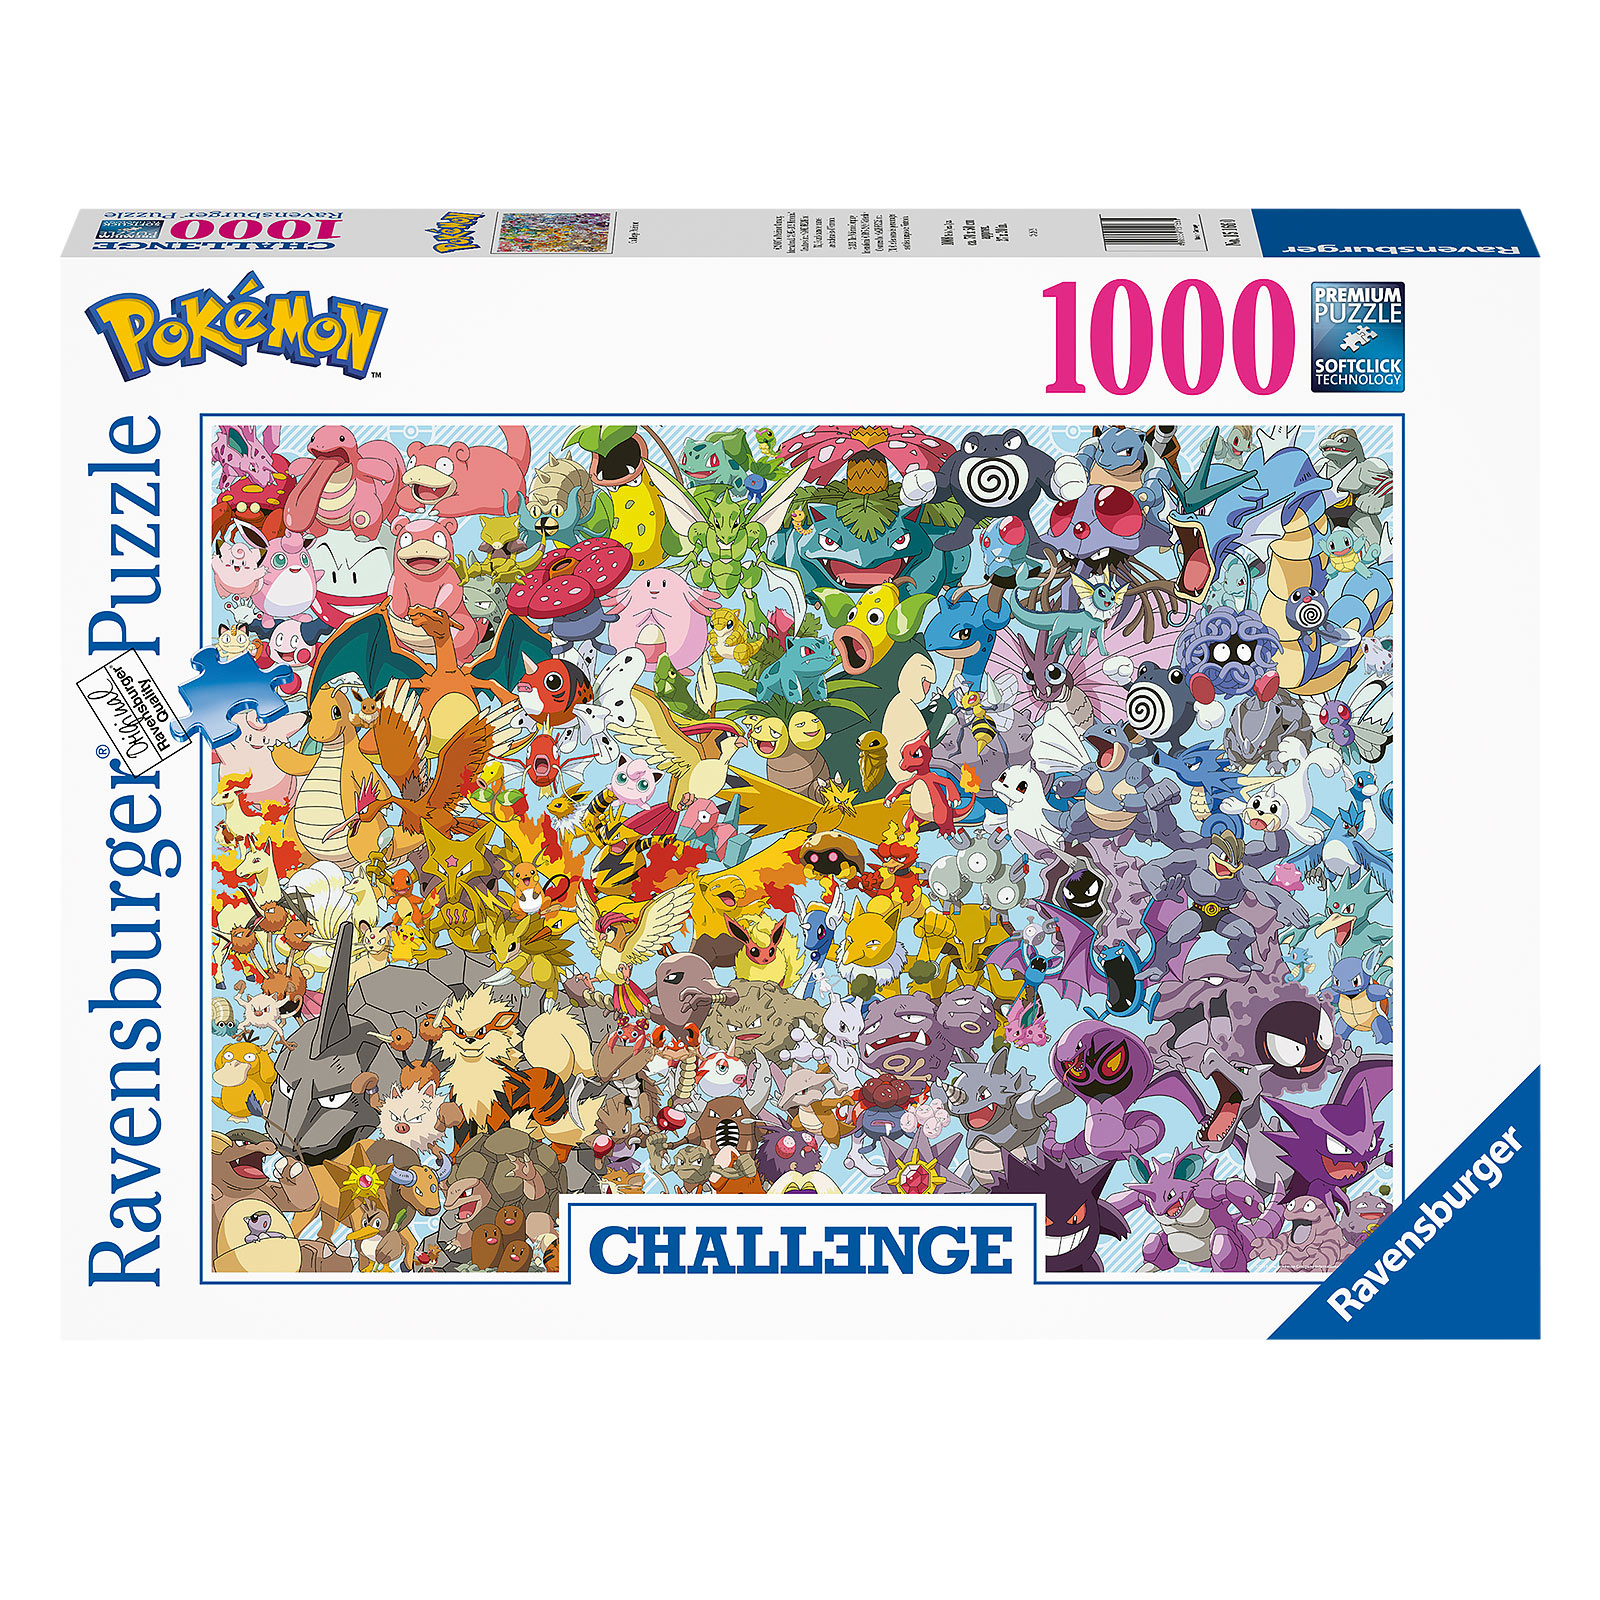 Pokemon - All Stars Challenge Puzzle